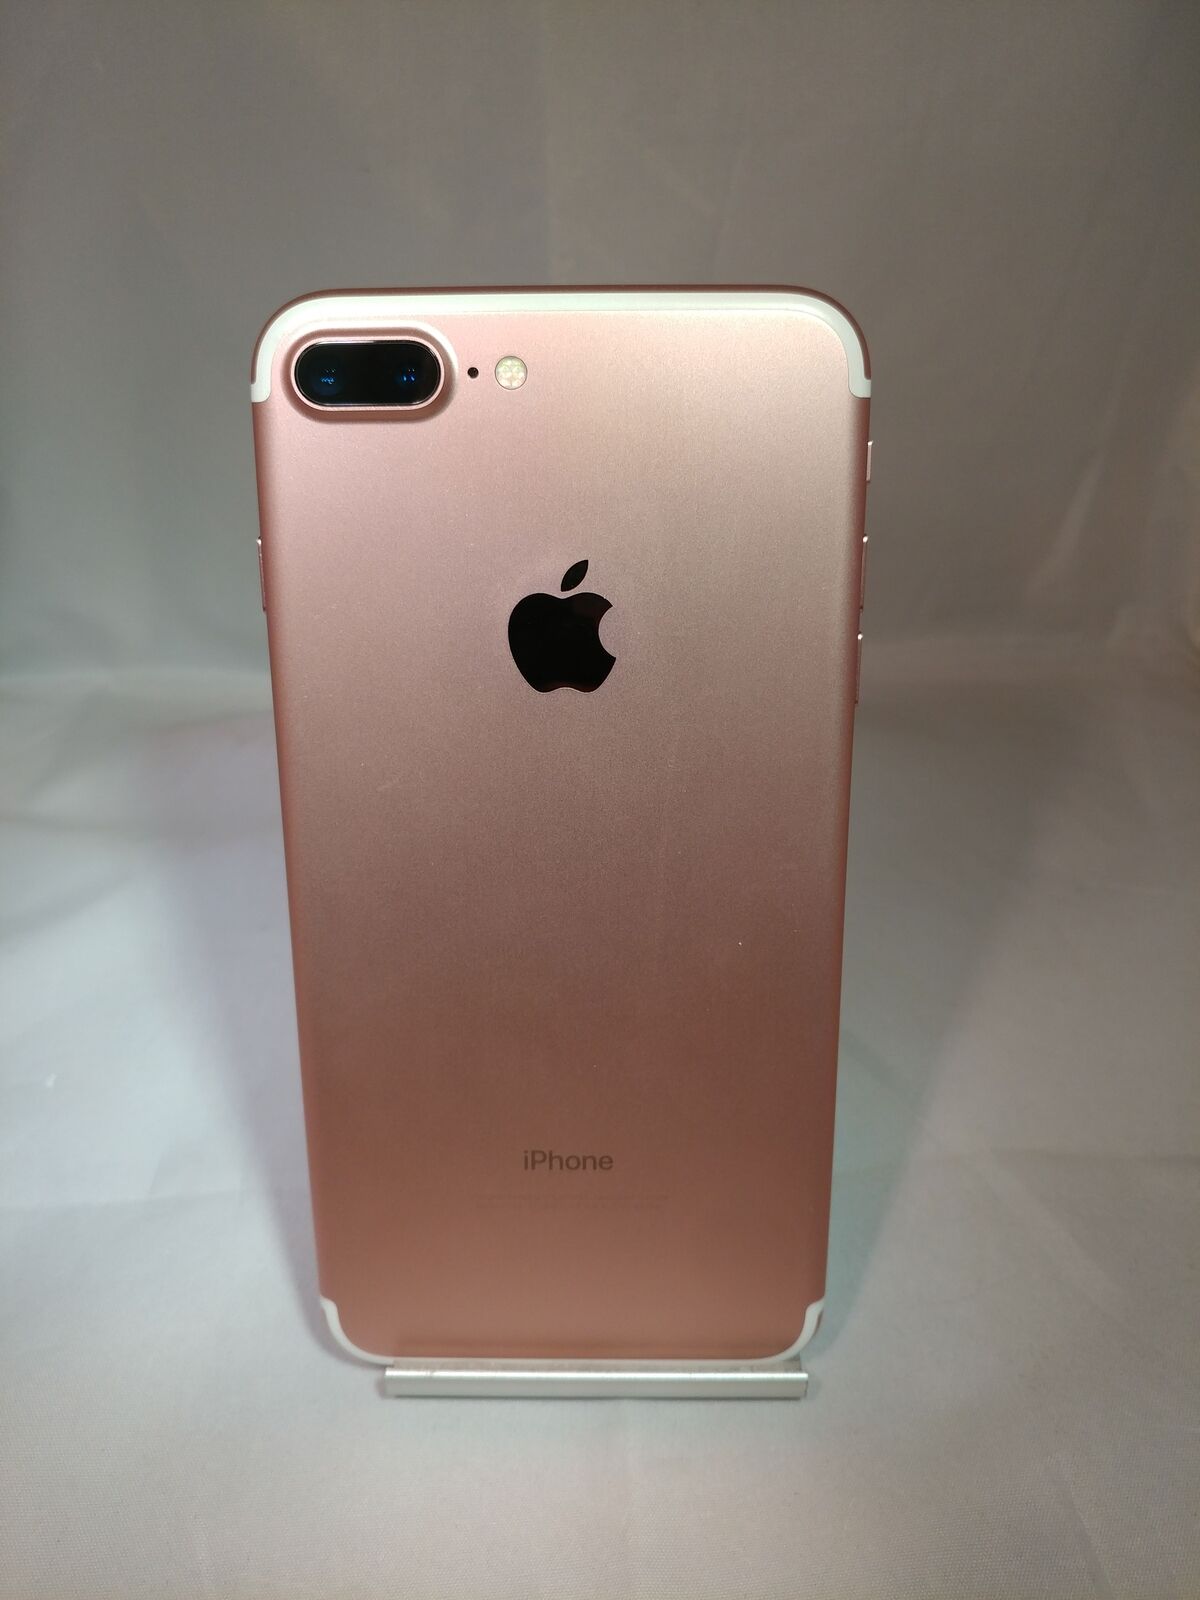 Apple iPhone 7 Plus 128GB Rose Gold Unlocked Good Condition